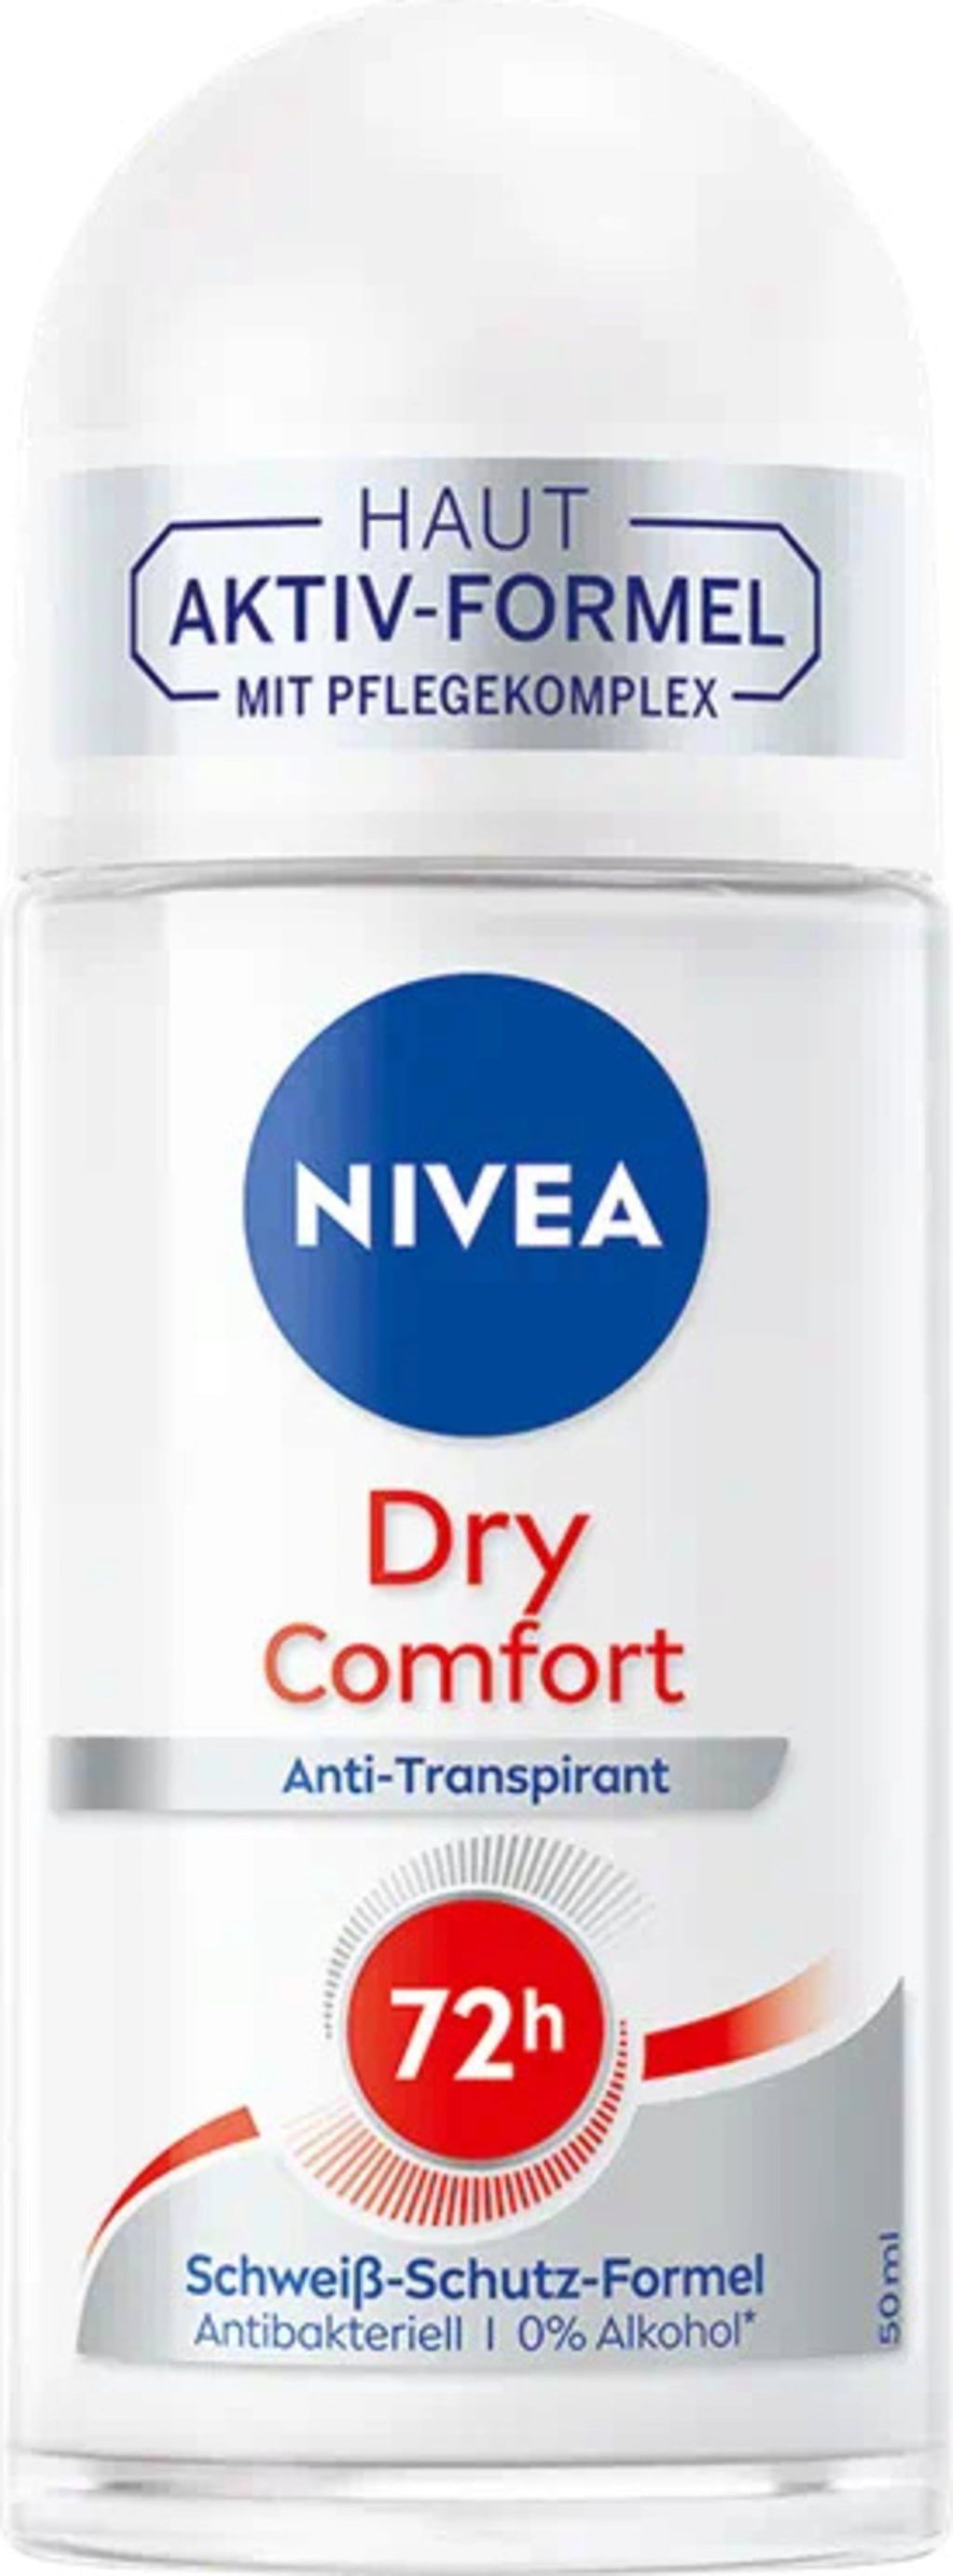 Dry Comfort Roll-On Anti-Perspirant Deodorant 50 ml